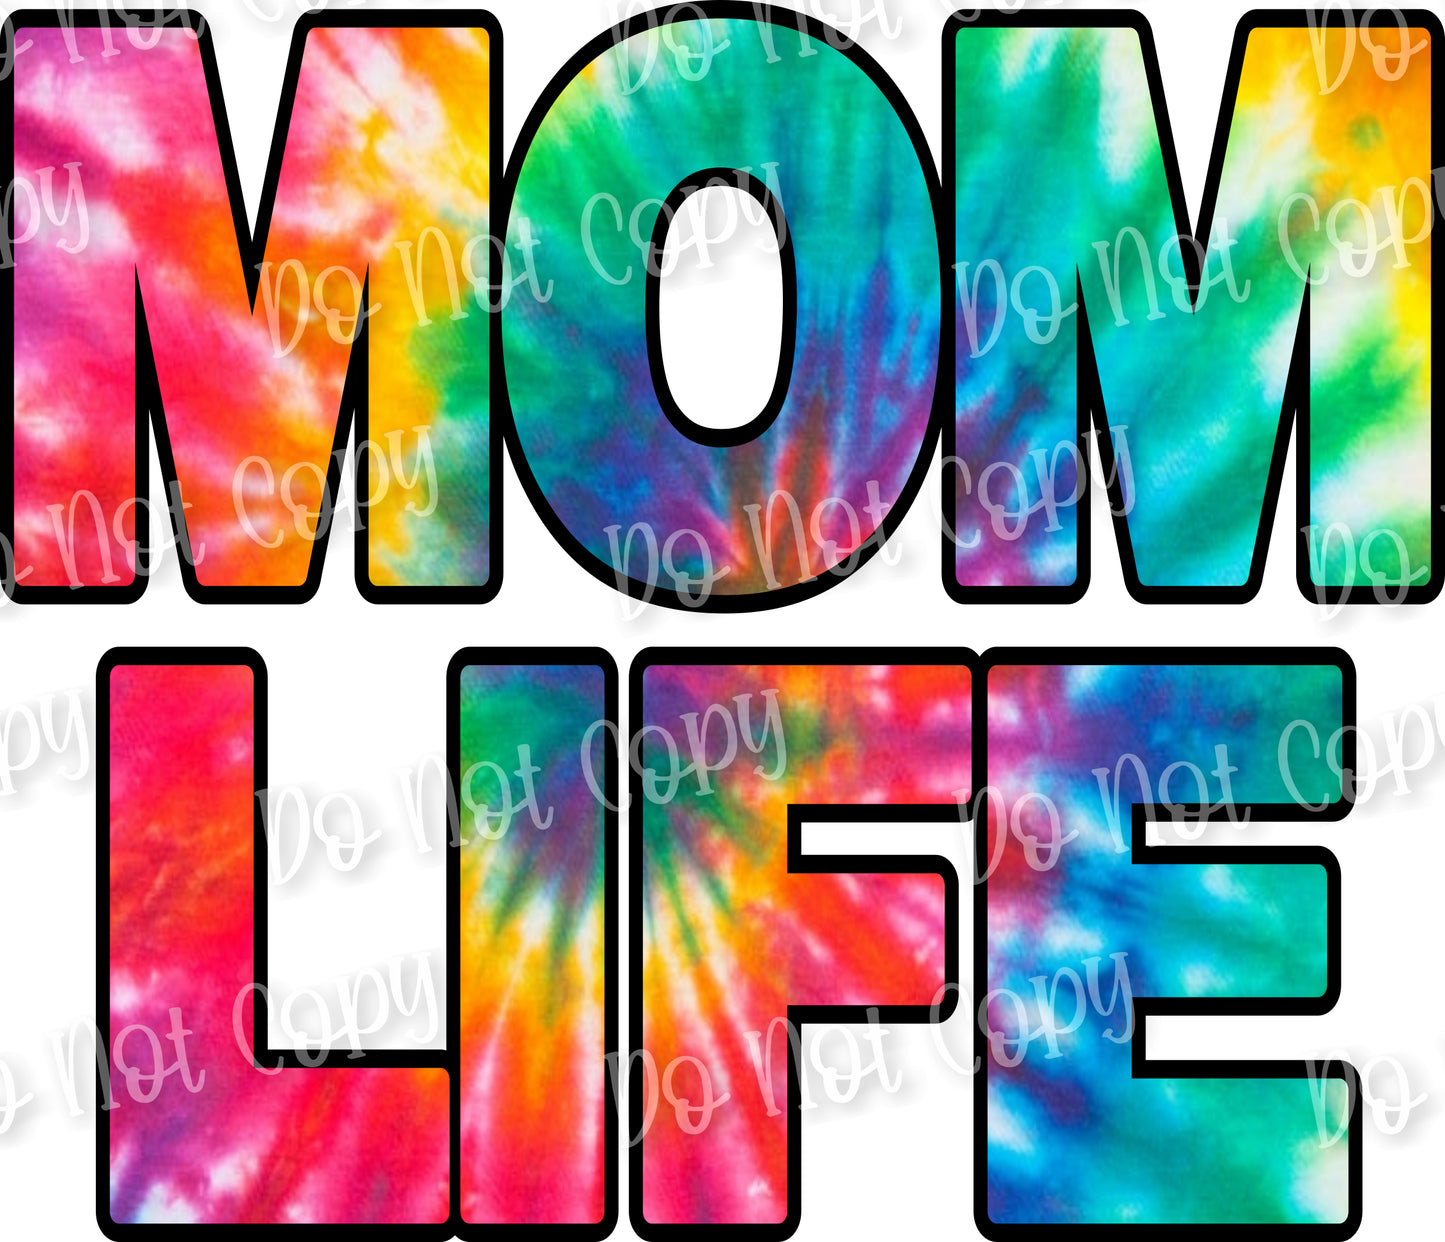 Mom Life Tie Dye